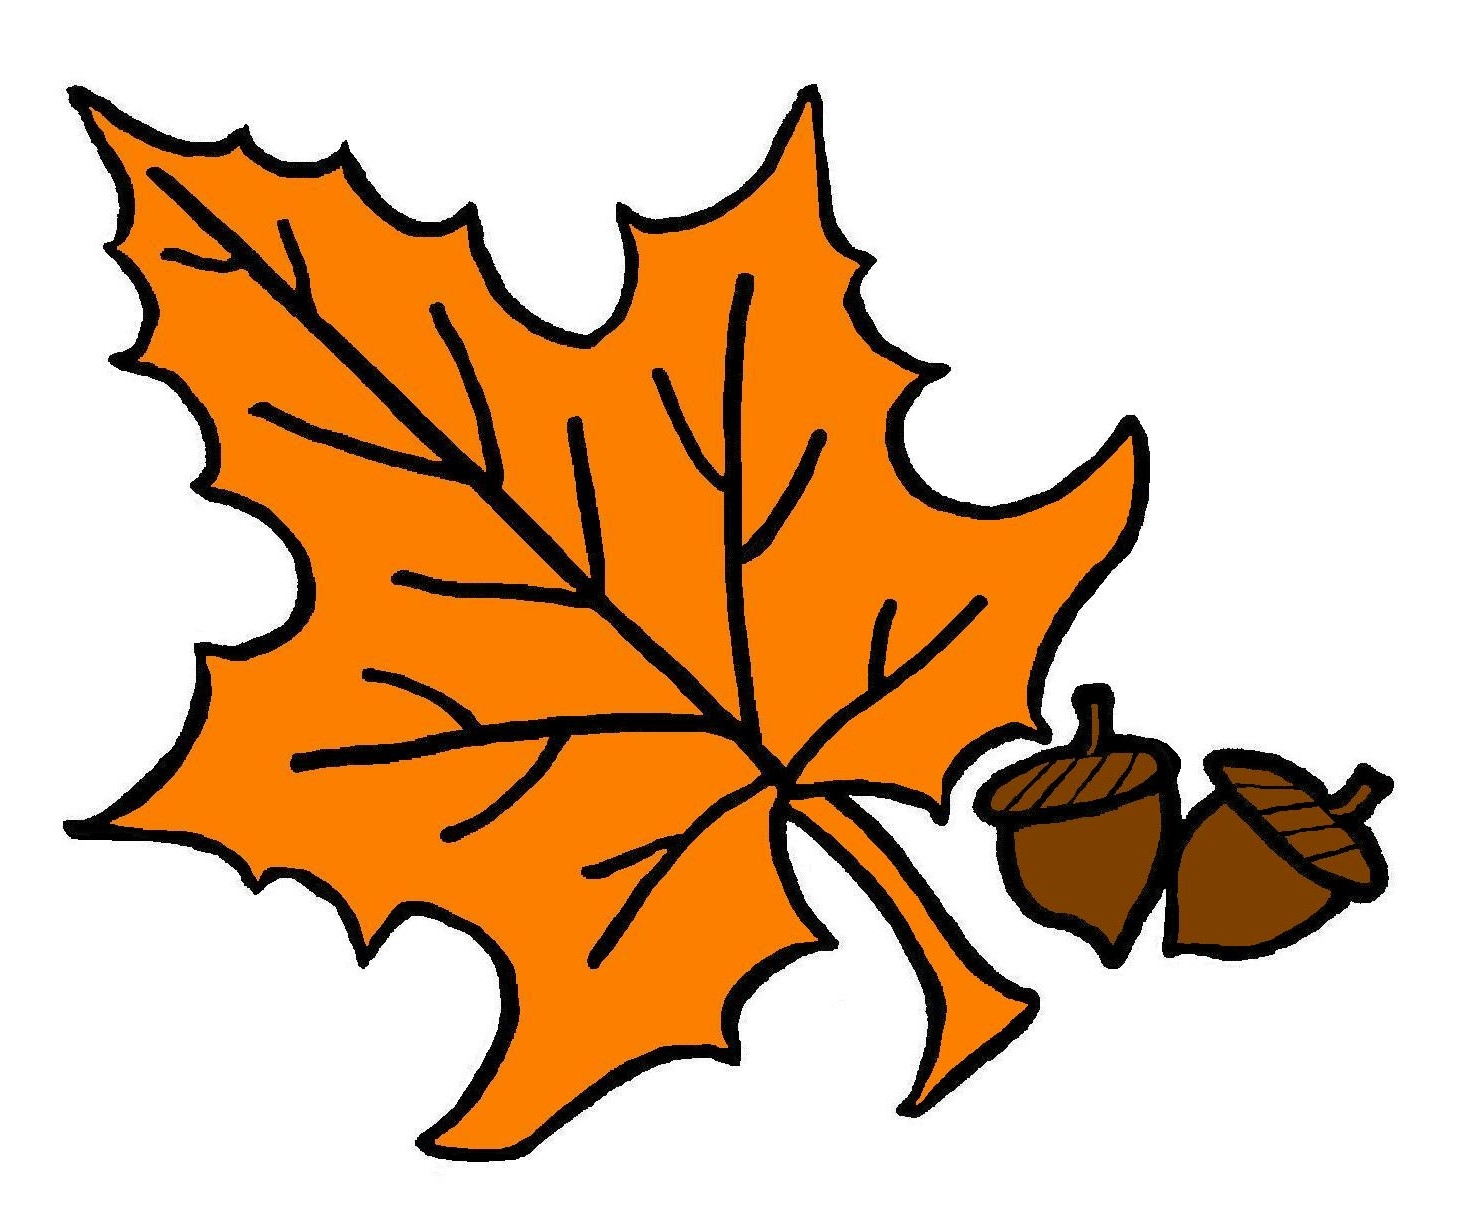 Fall leaves clip art free